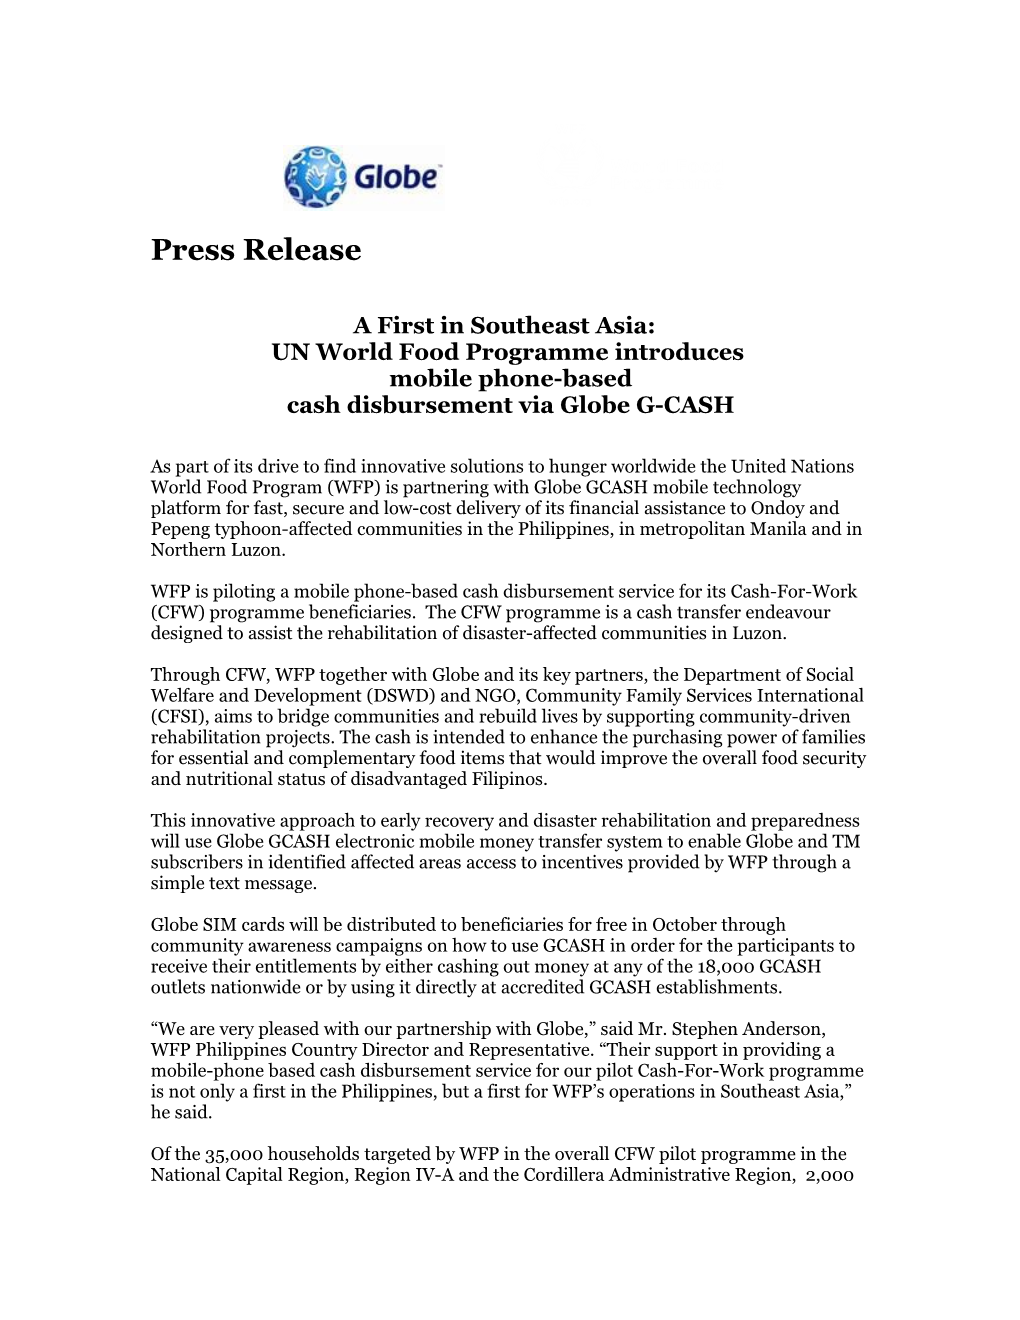 Globe, AFI, DSWD, WFP in Historic Partnership to Rehabilitate